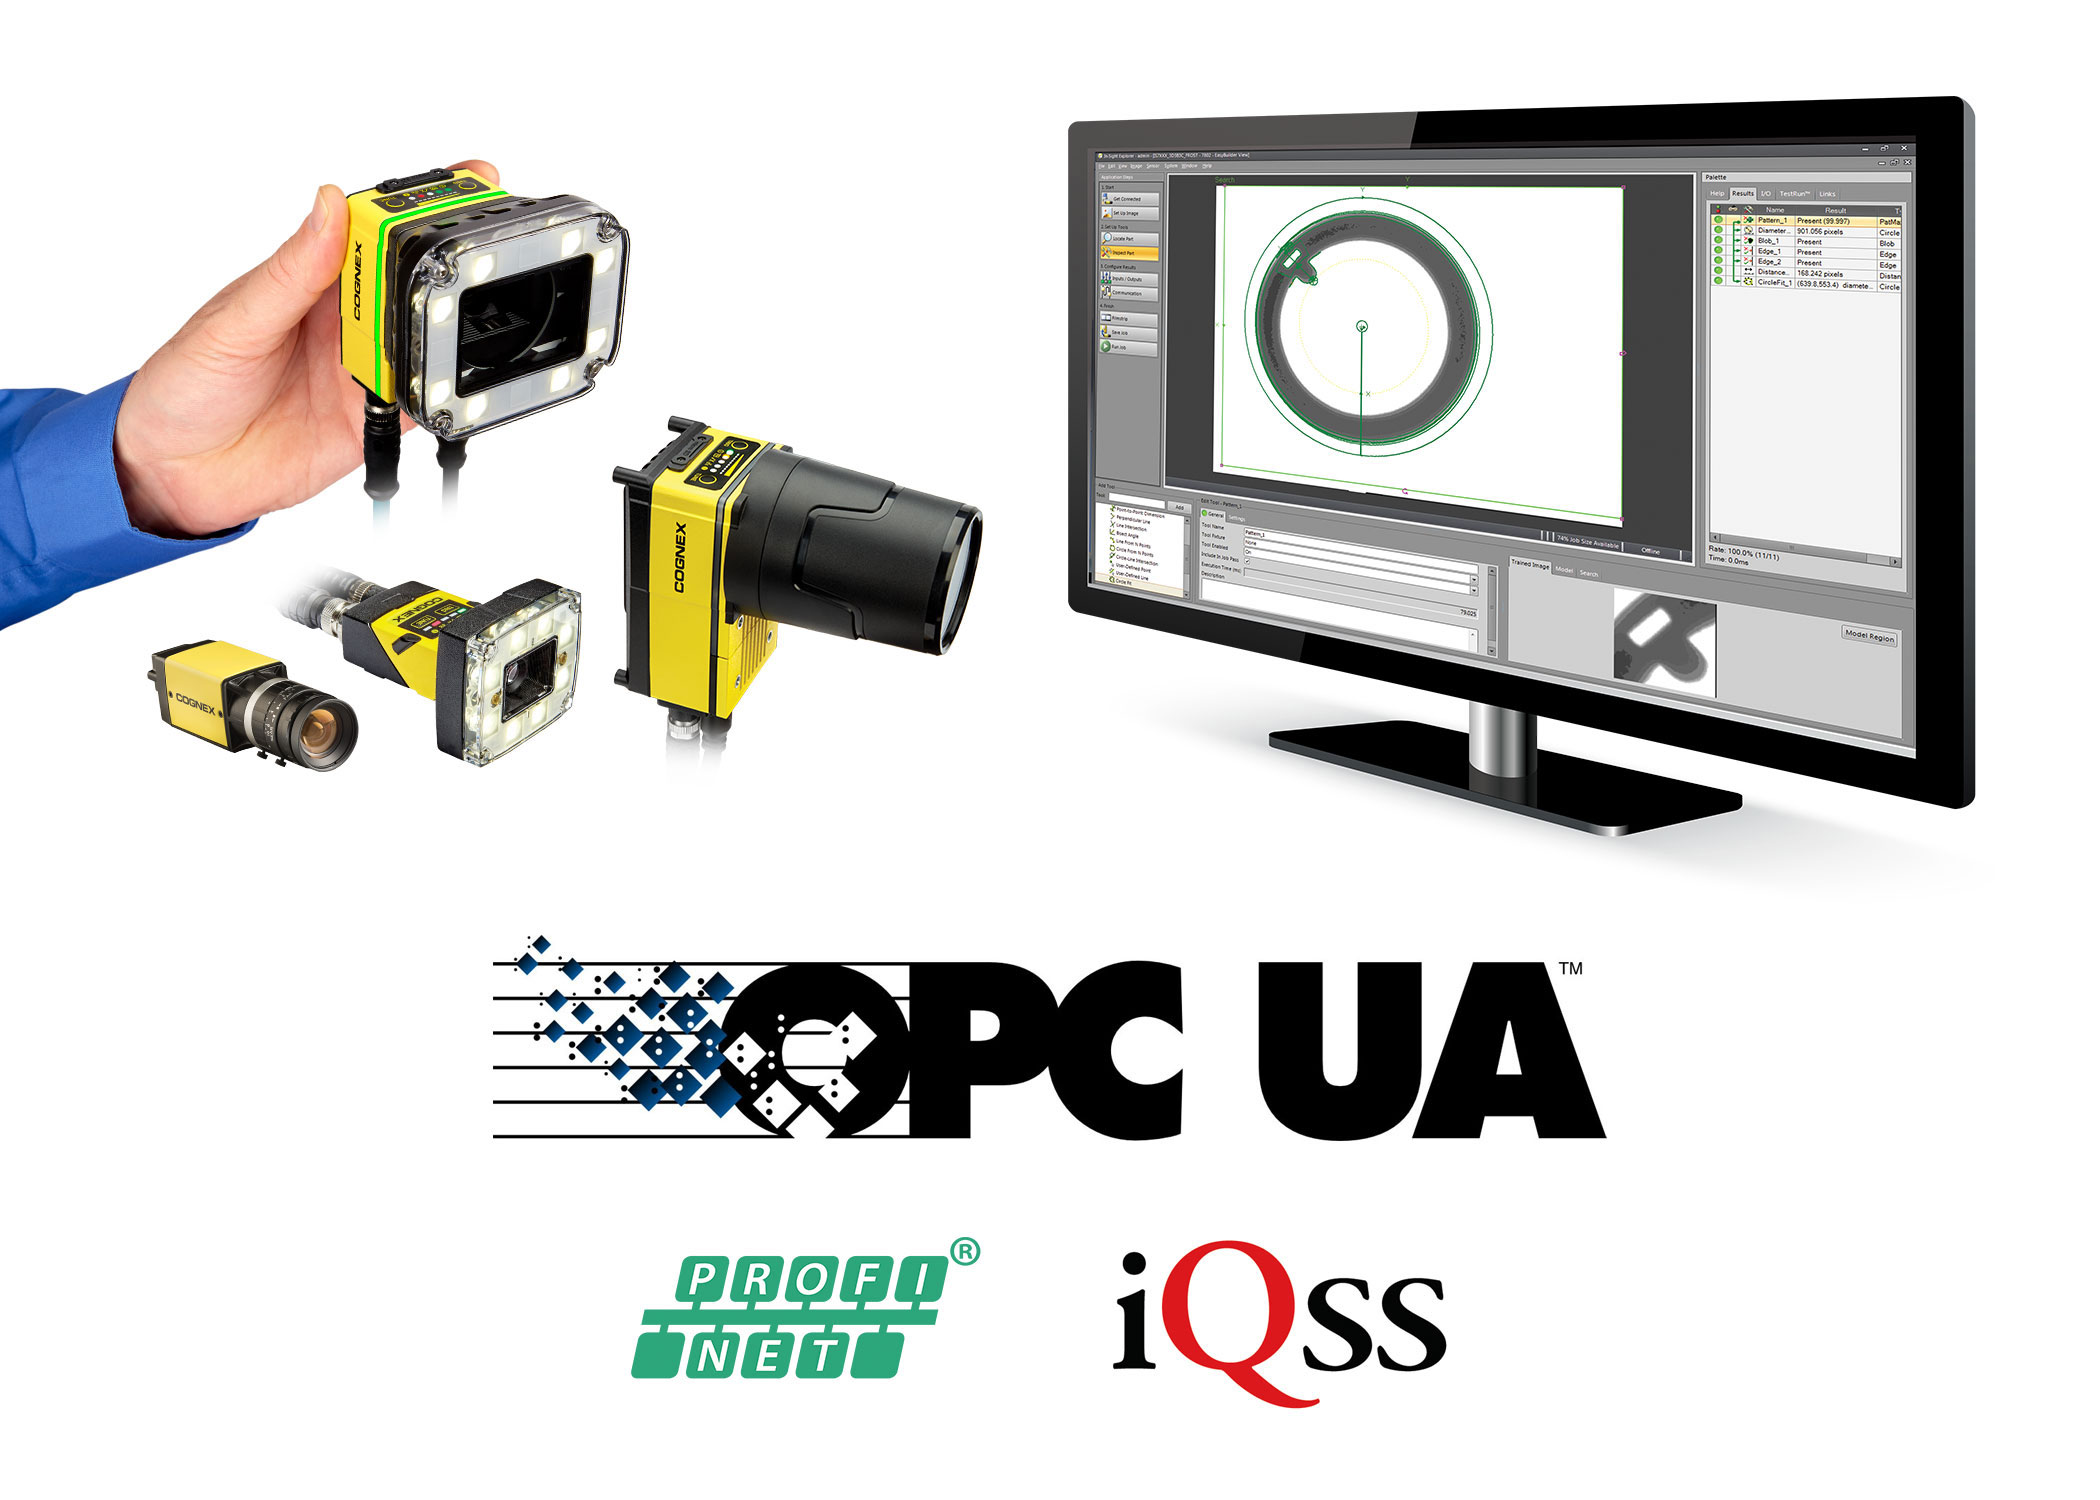 OPC-UA PROFINET IQSS COGNEX Vision Systems和Monitor上的软件